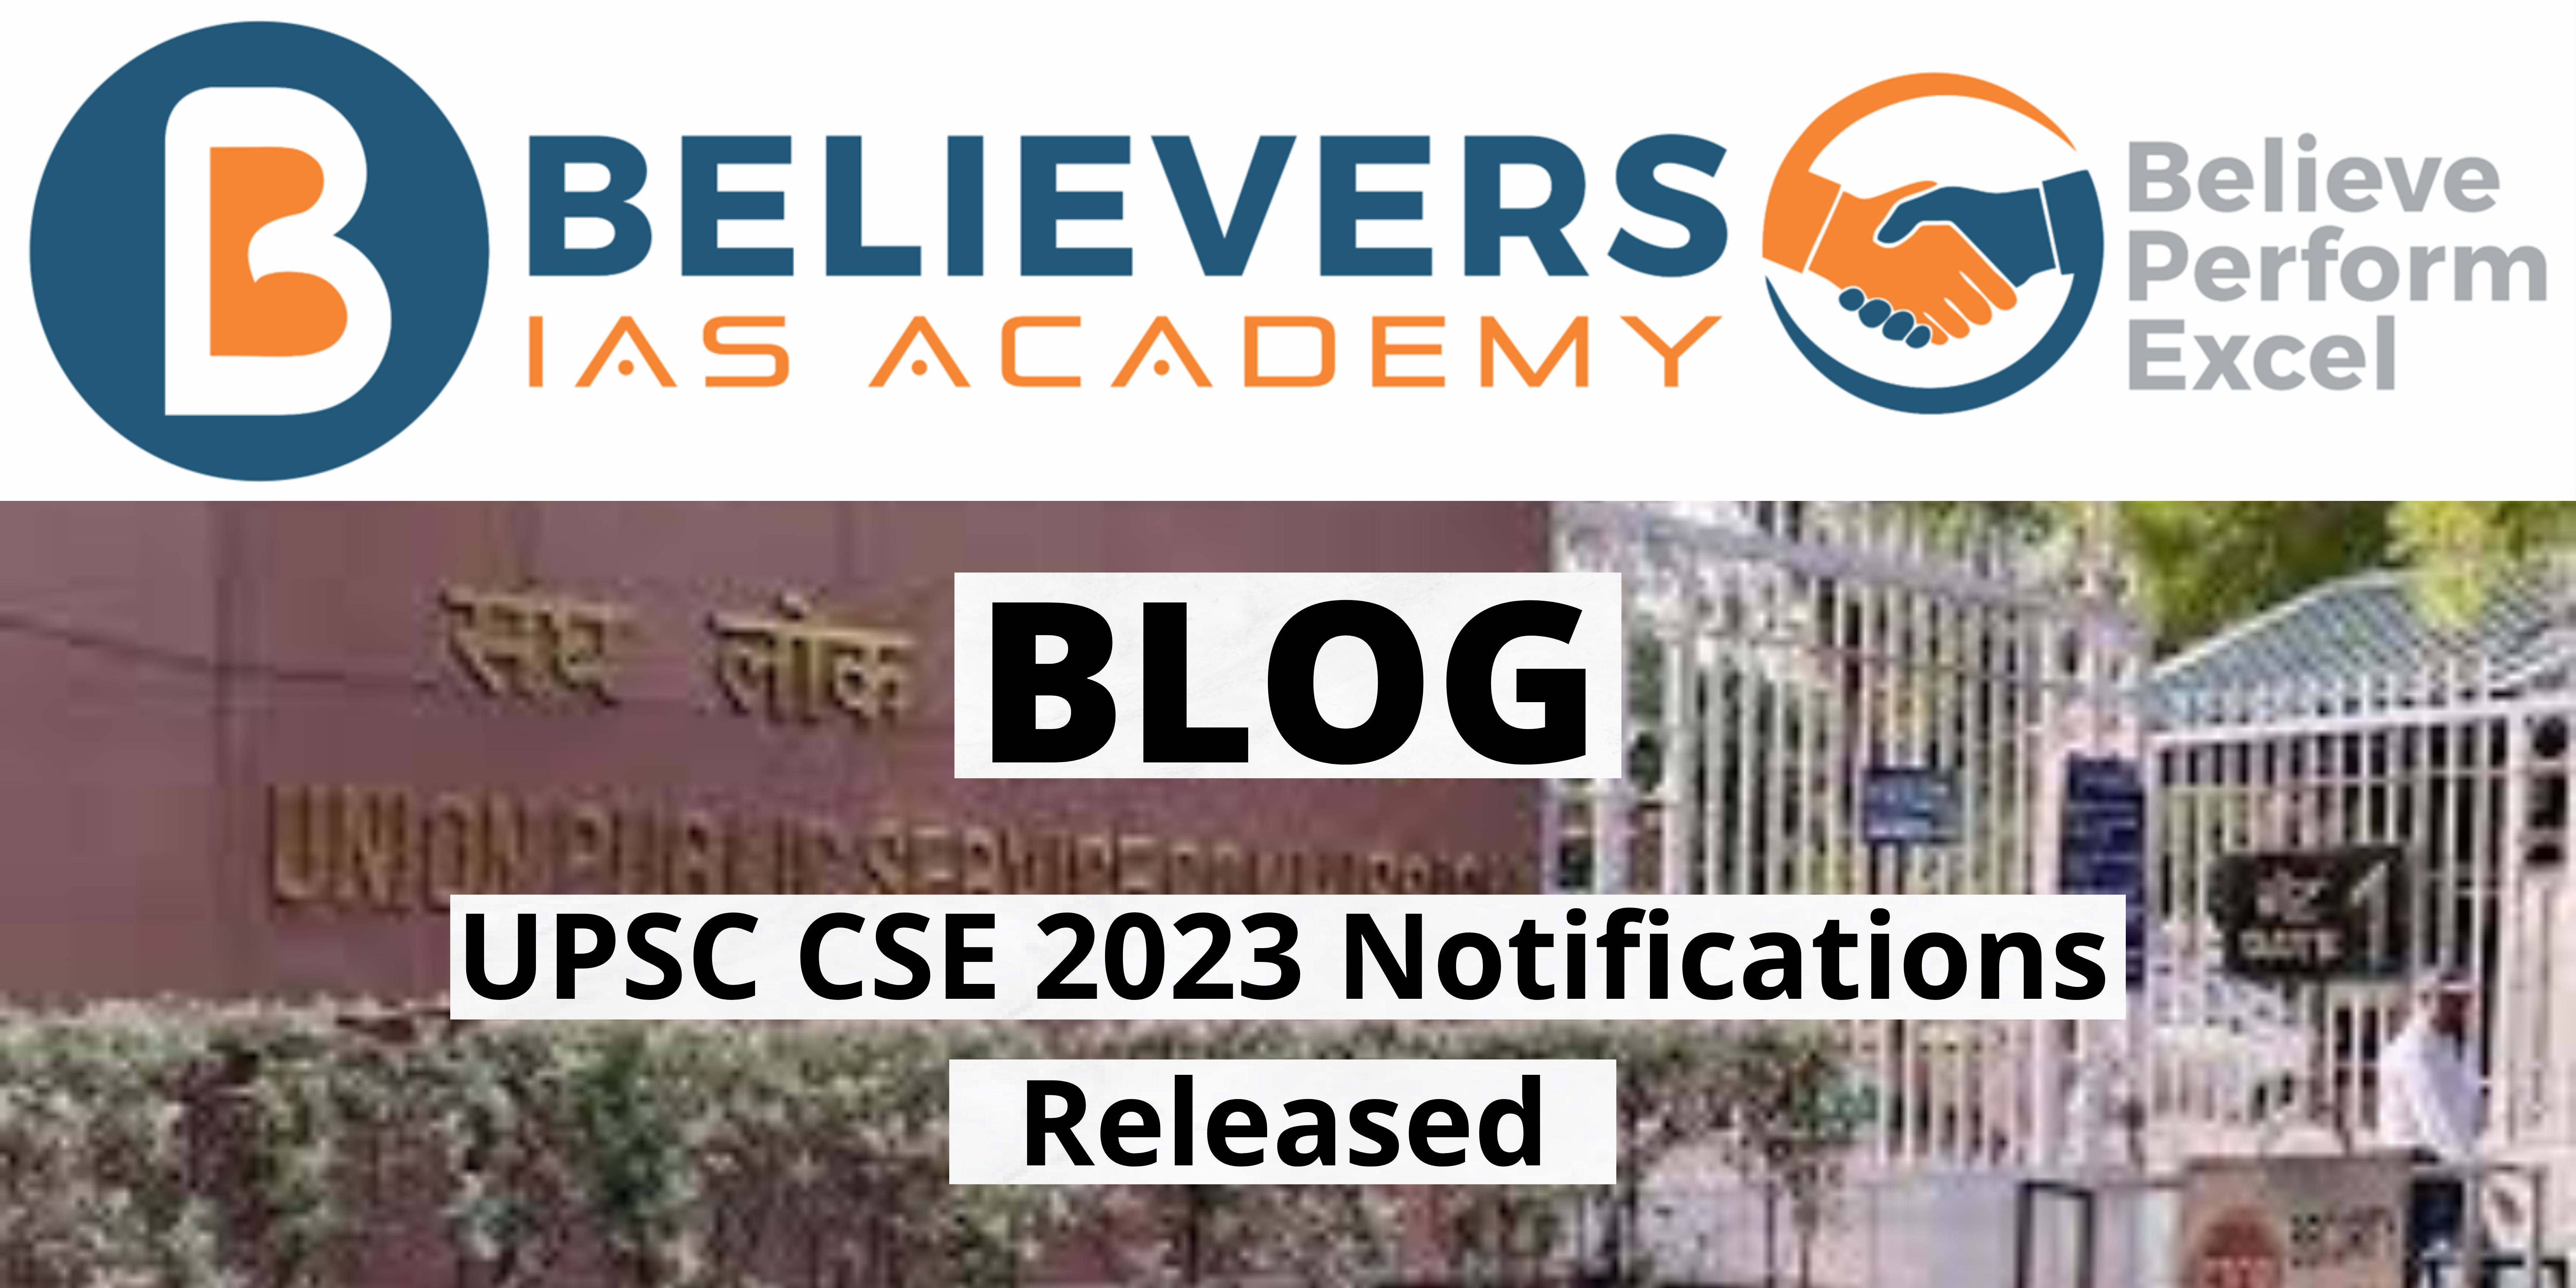 UPSC CSE 2023 Notifications Released